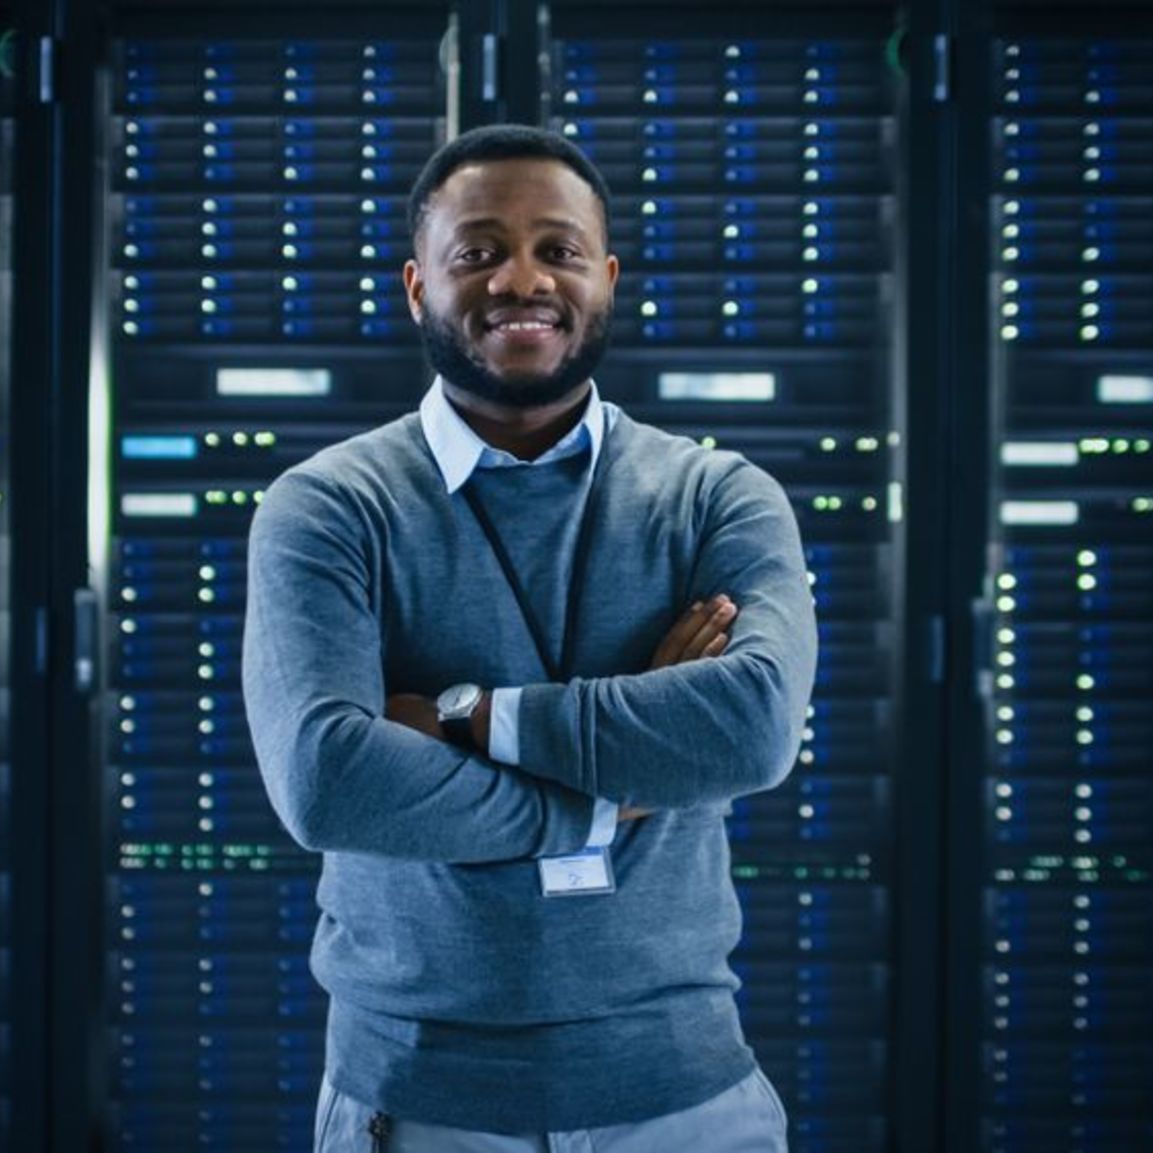 Data Engineer standing in front of servers.  